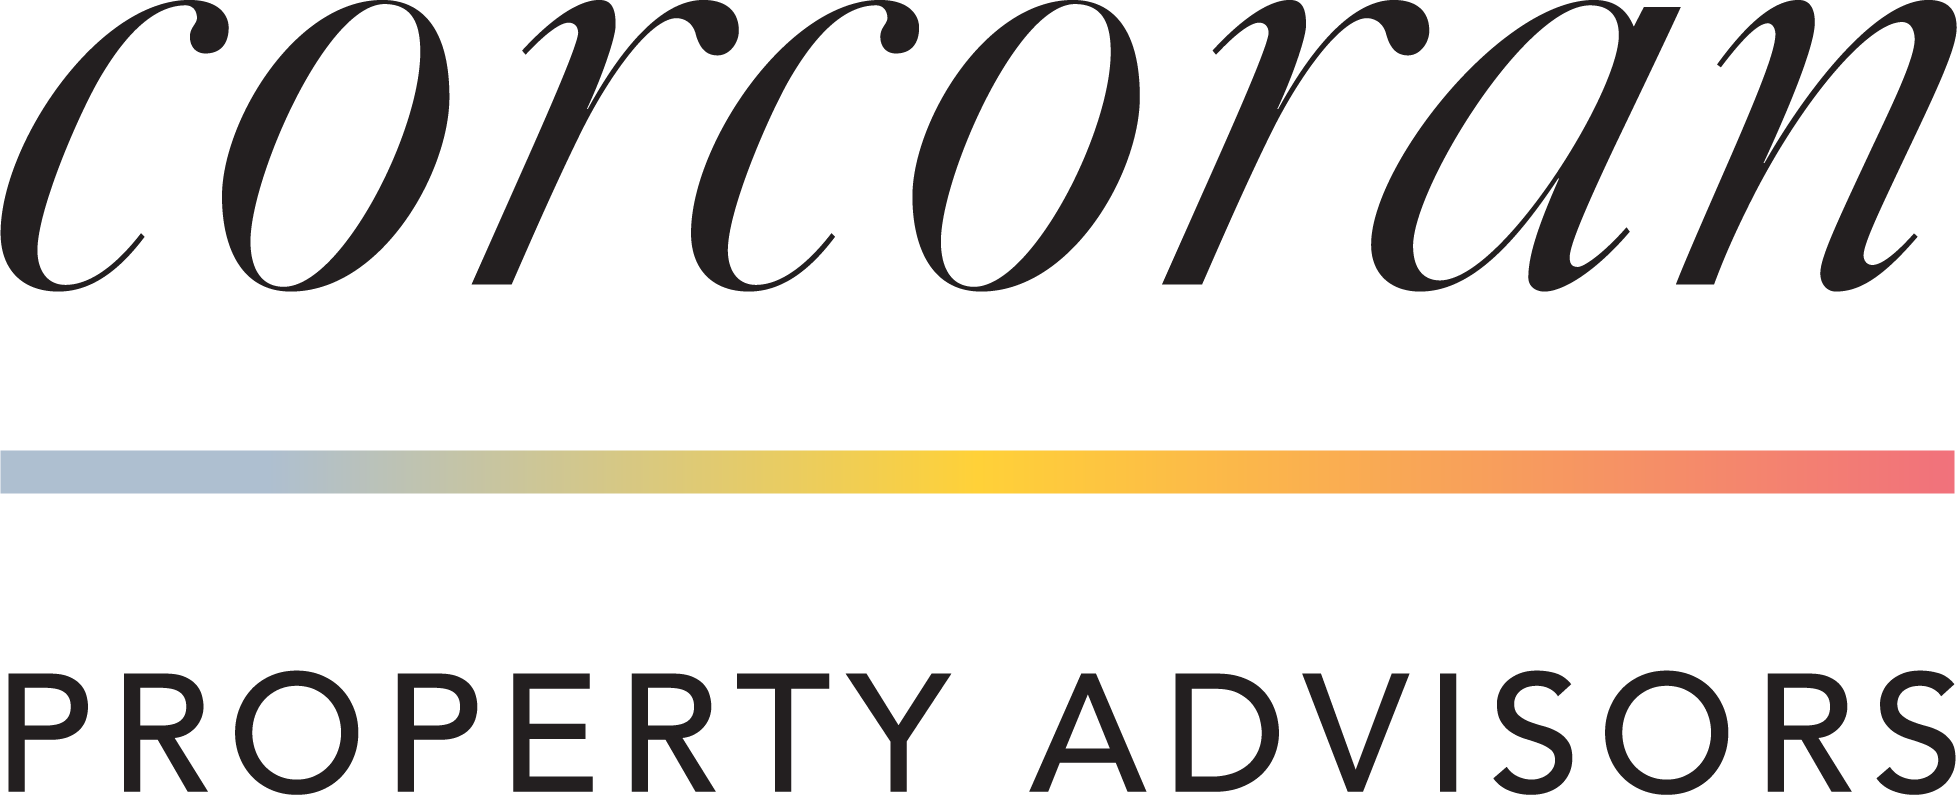 Corcoran Property Advisors logo